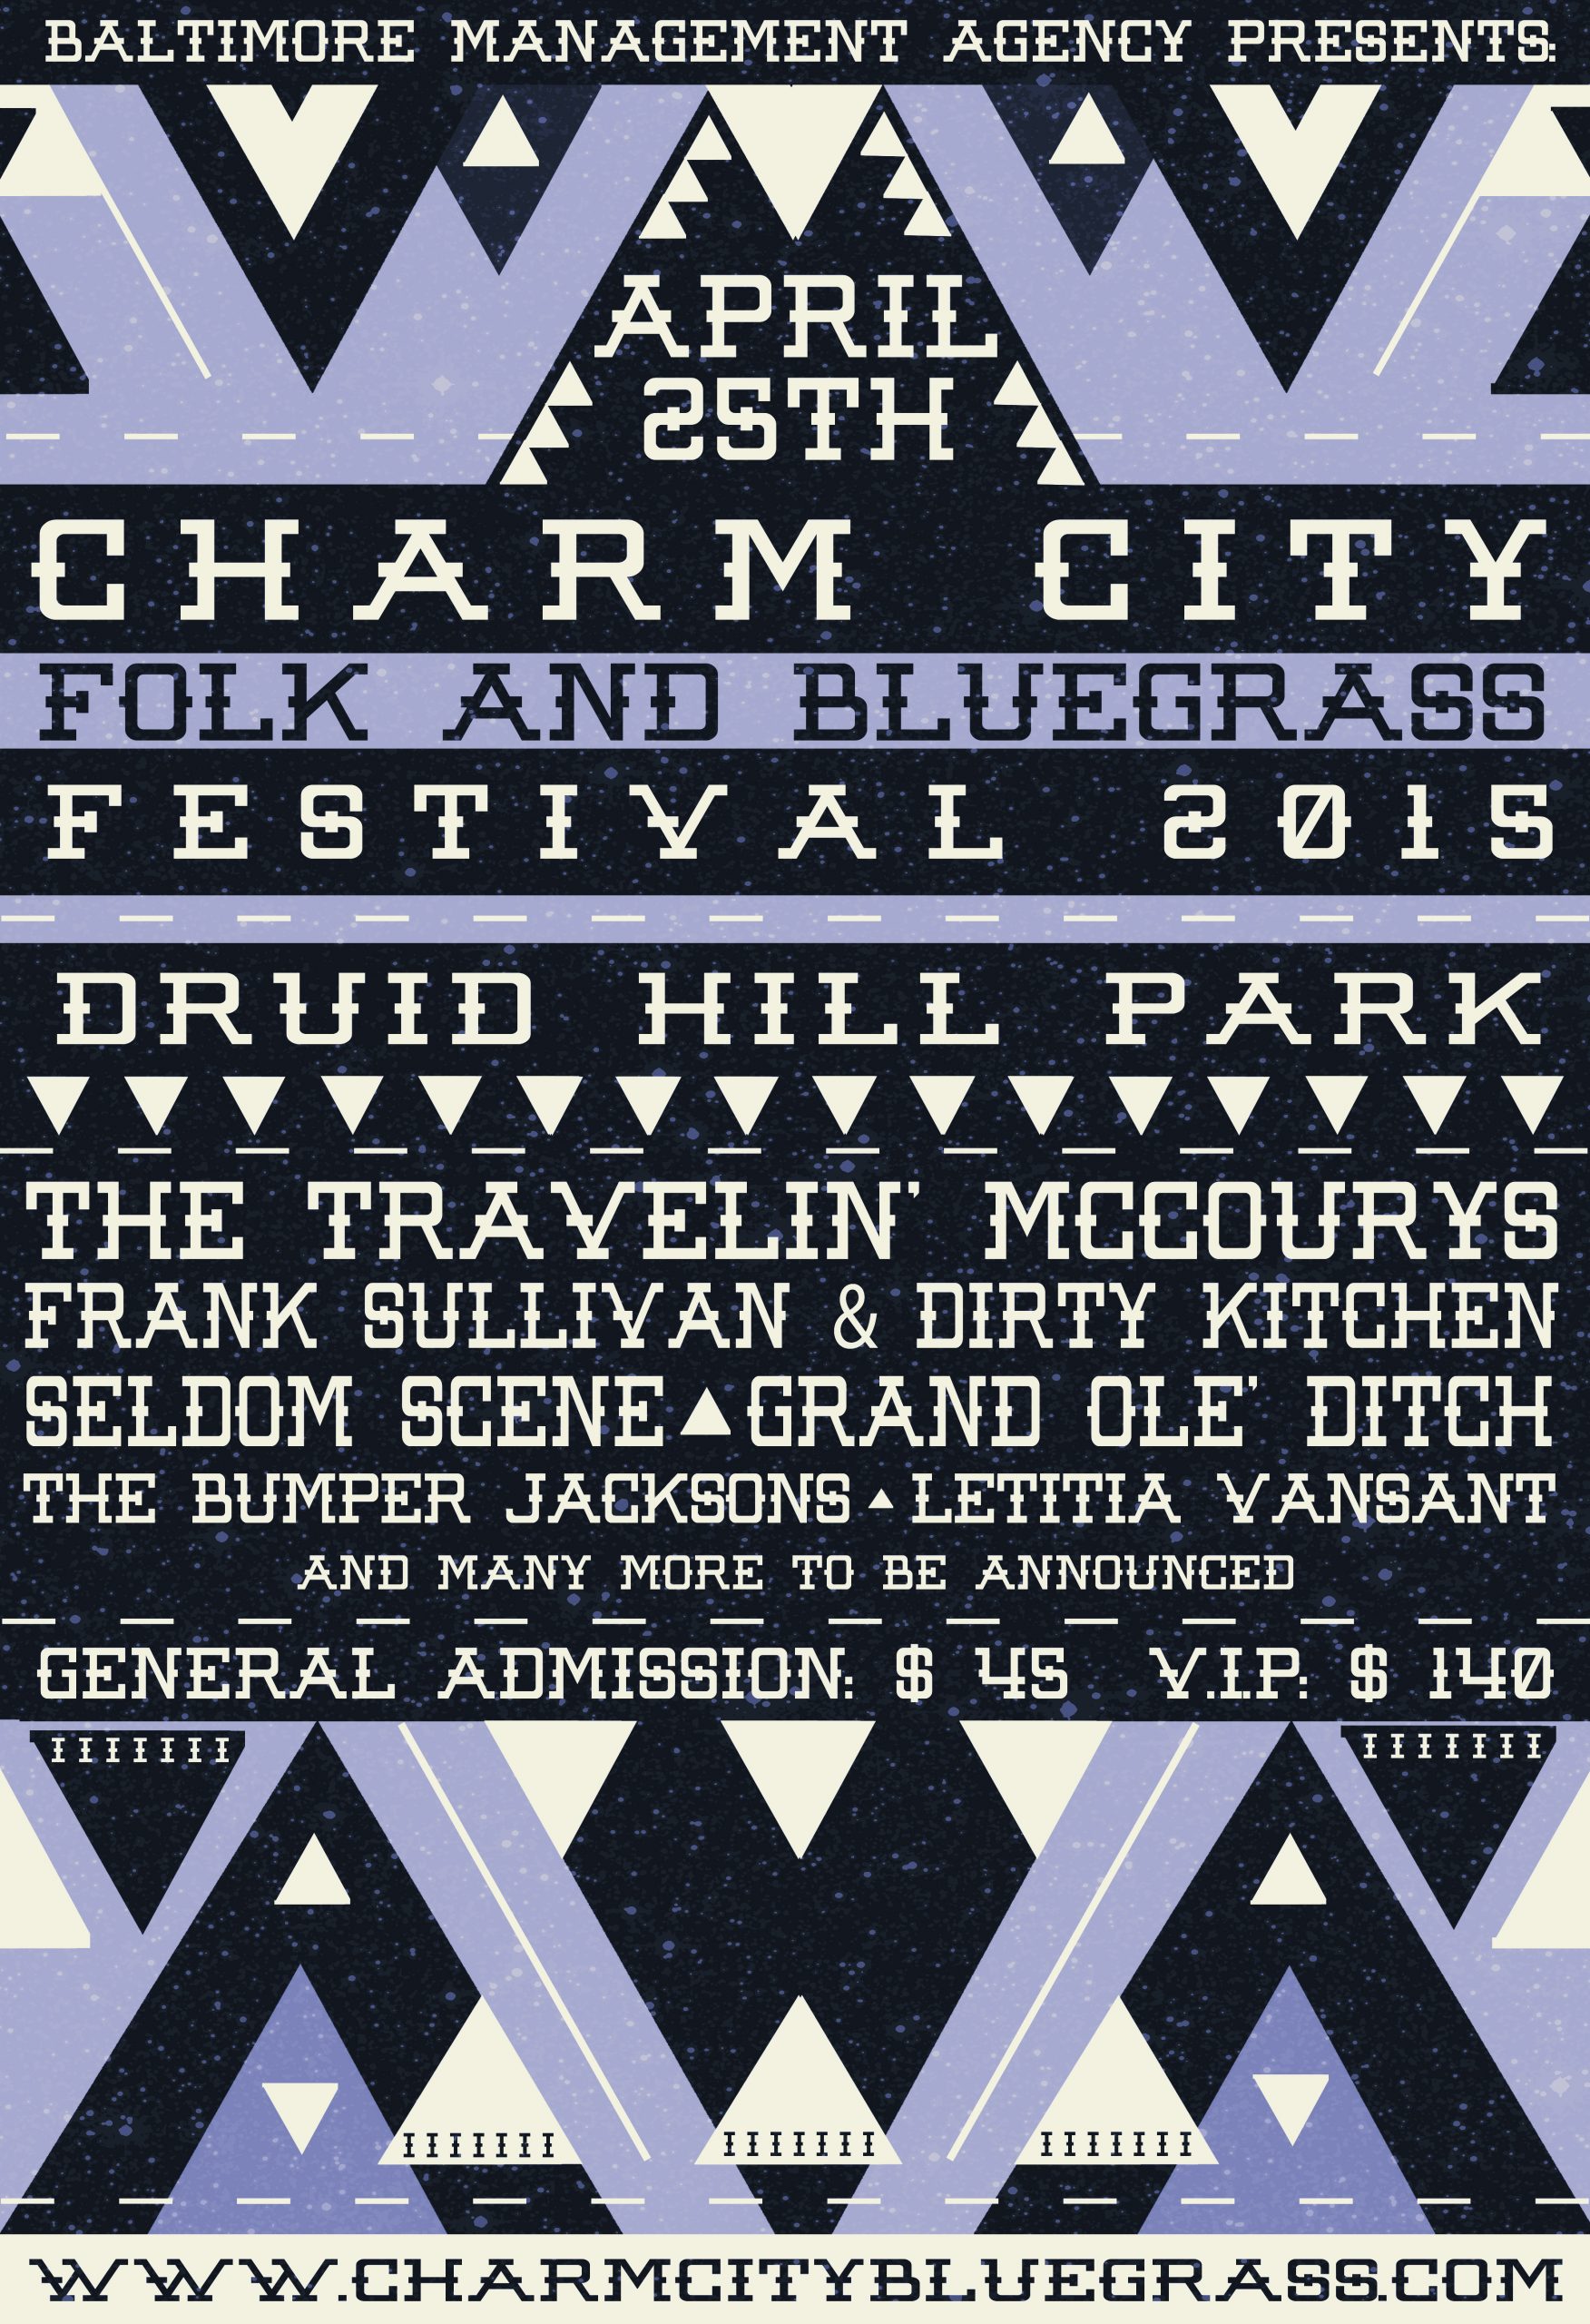 Charm City Folk and Bluegrass Festival Announces Initial Lineup